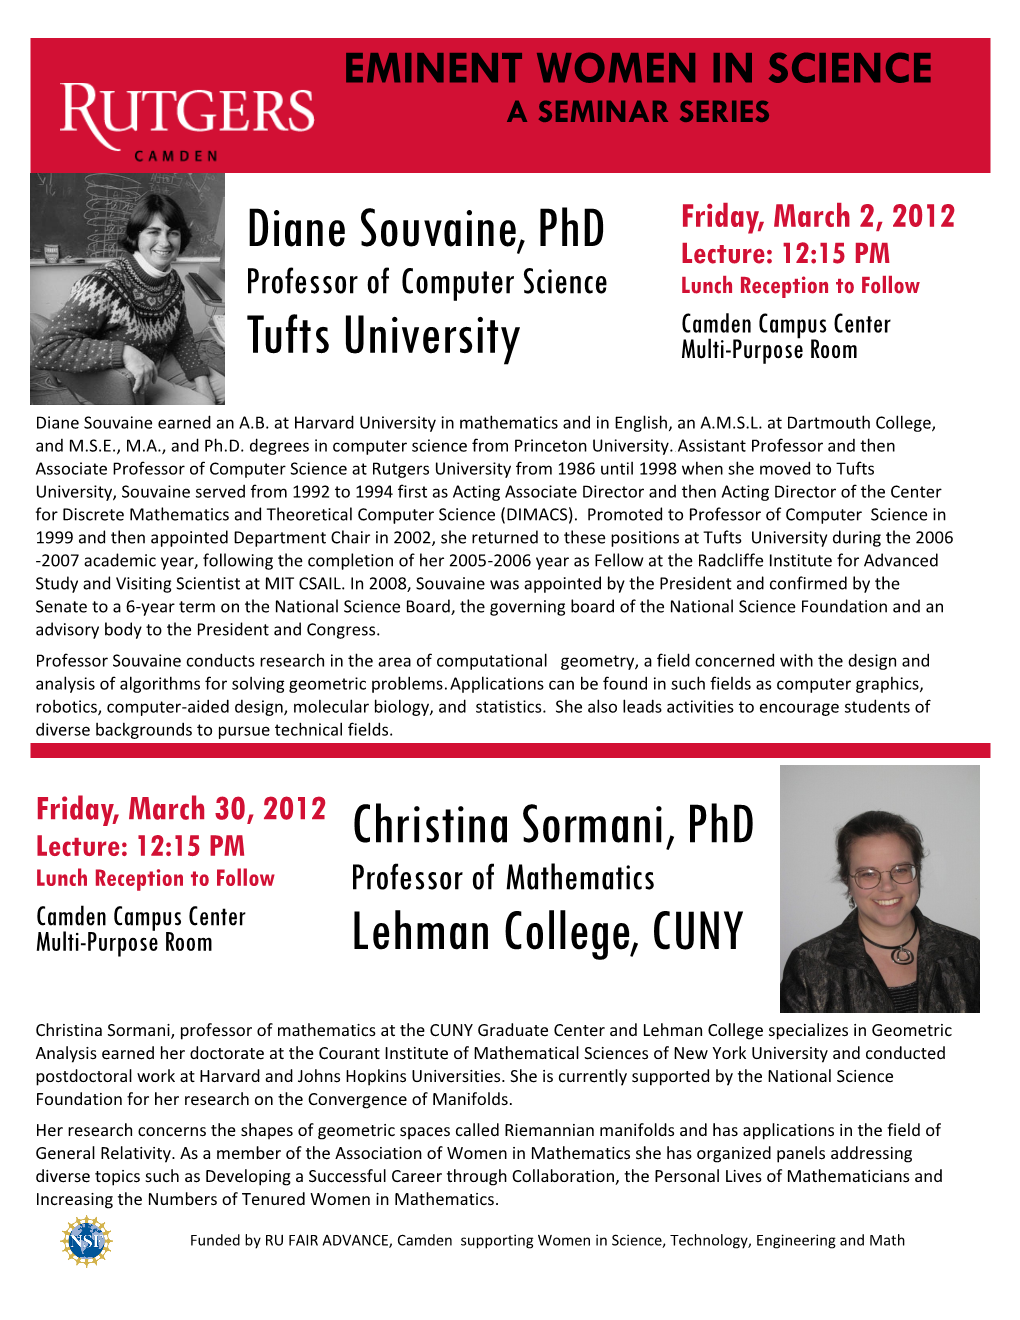 Diane Souvaine, Phd Tufts University Christina Sormani, Phd Lehman College, CUNY